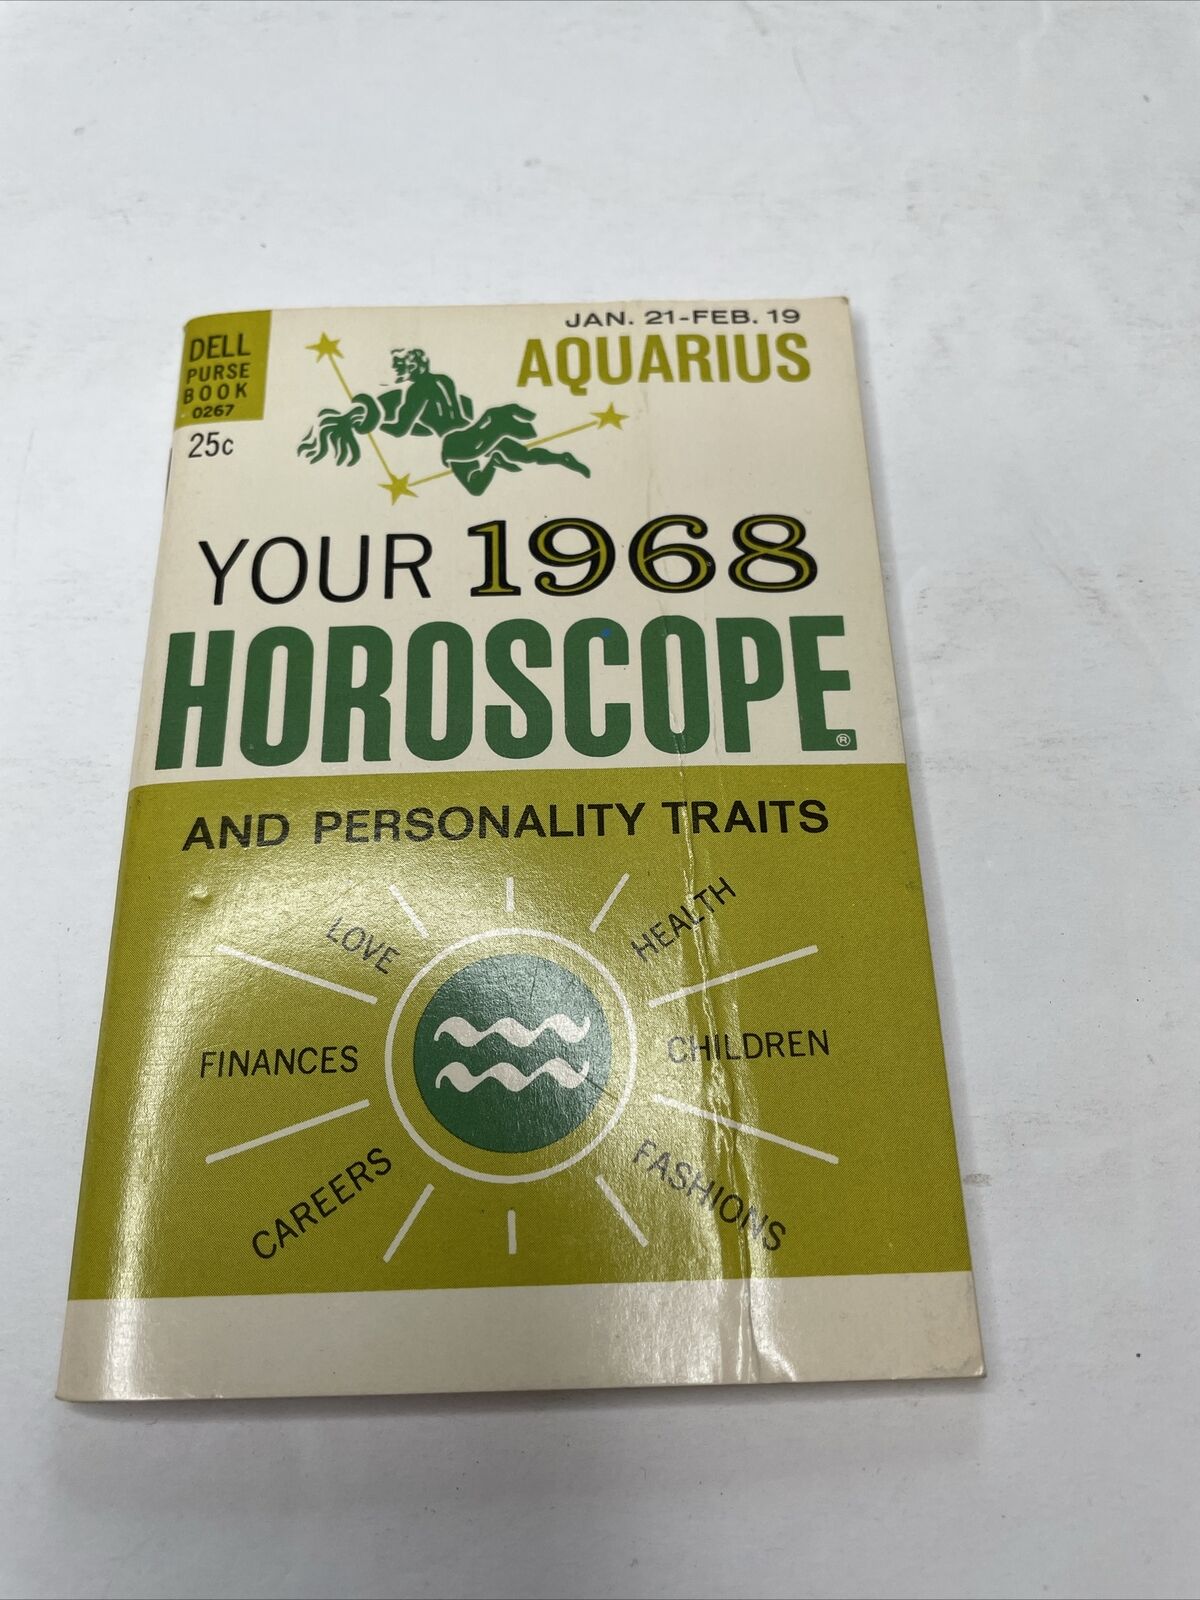 Dell Purse Book Aquarius Horoscope 1968 Vintage